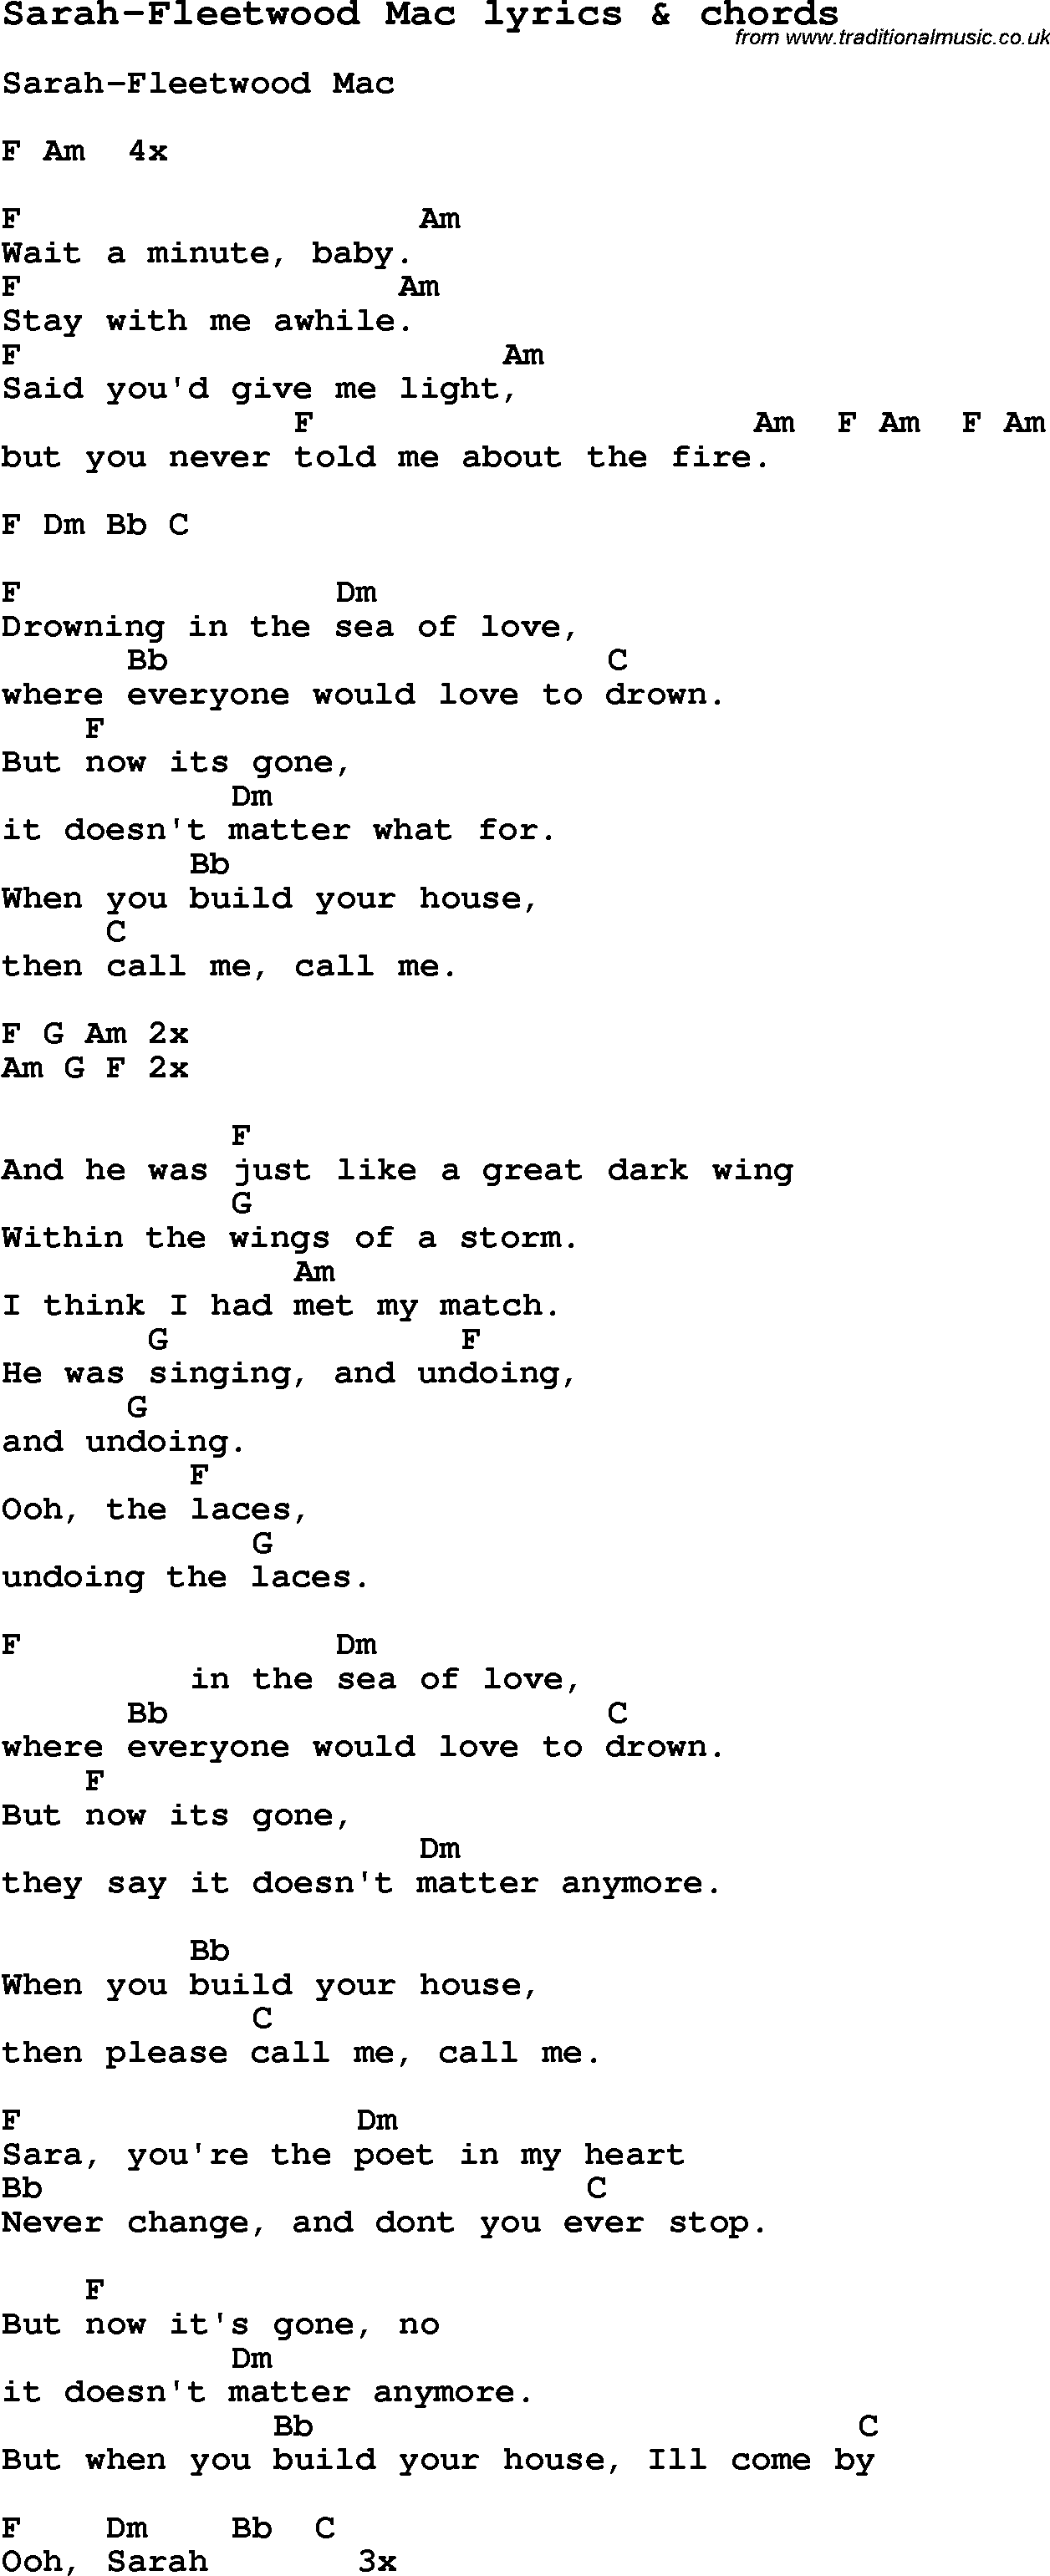 Love Song Lyrics for: Sarah-Fleetwood Mac with chords for Ukulele, Guitar Banjo etc.